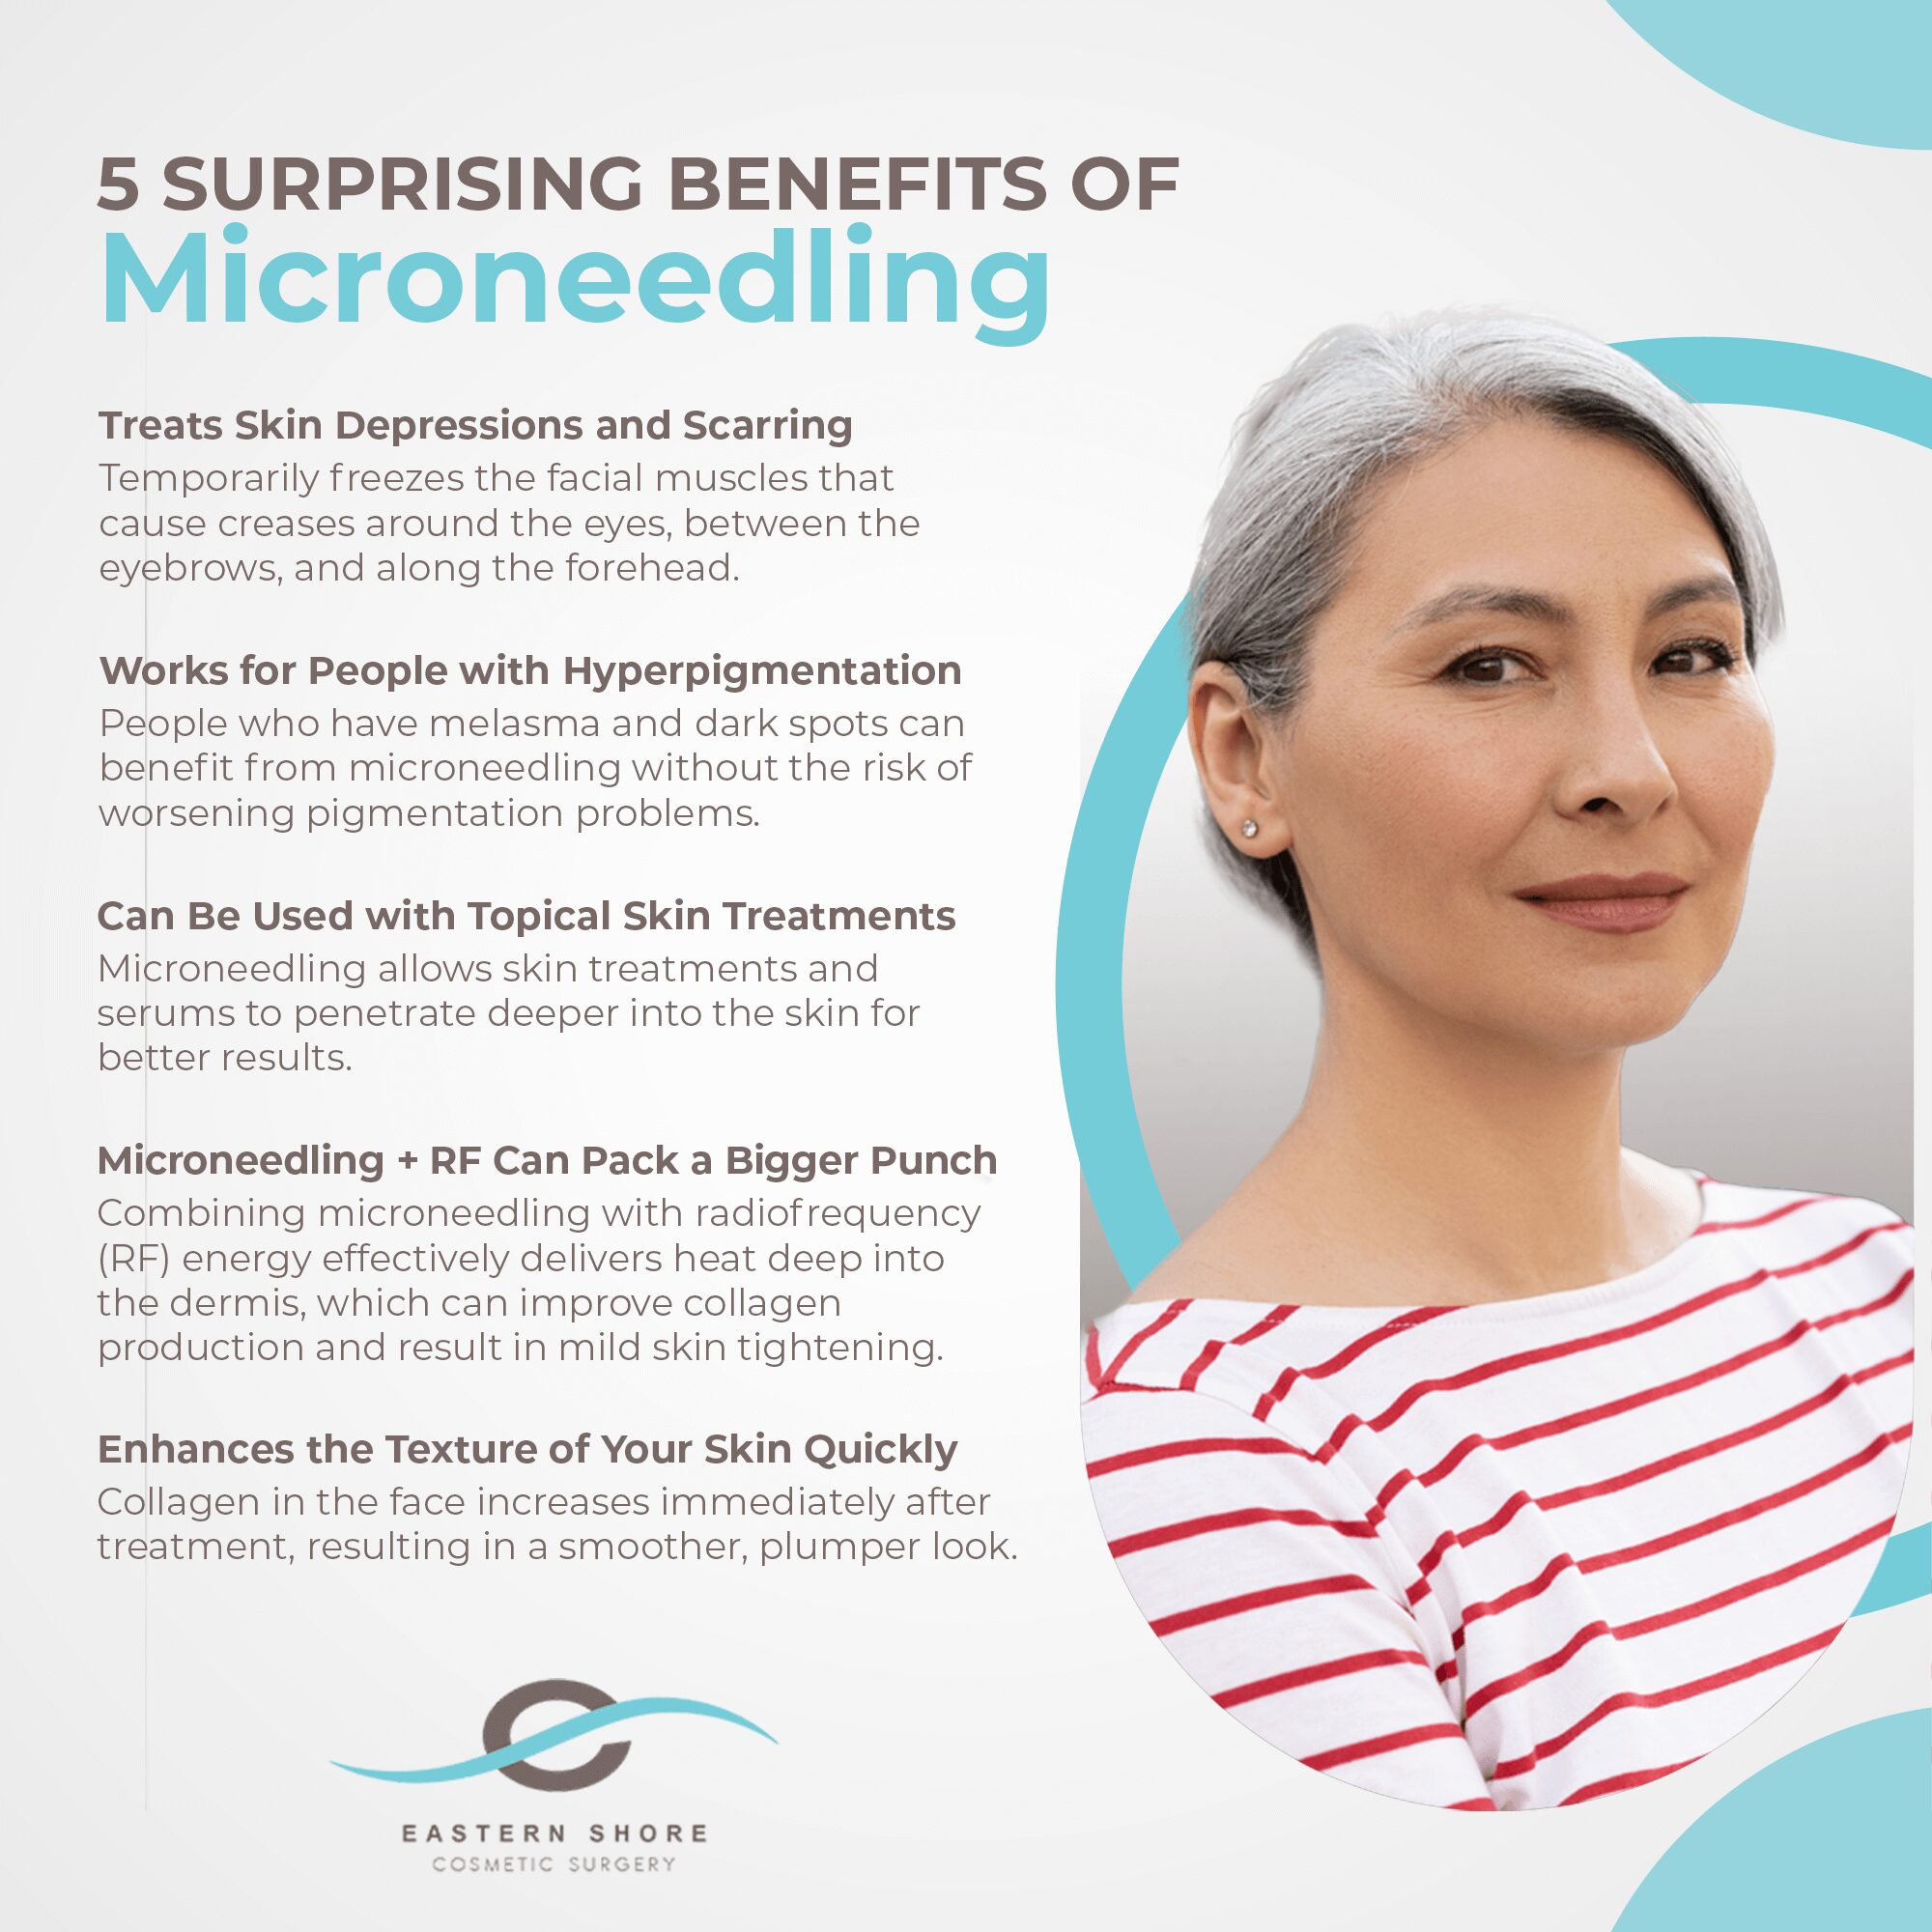 5 Surprising Benefits of Microneedling